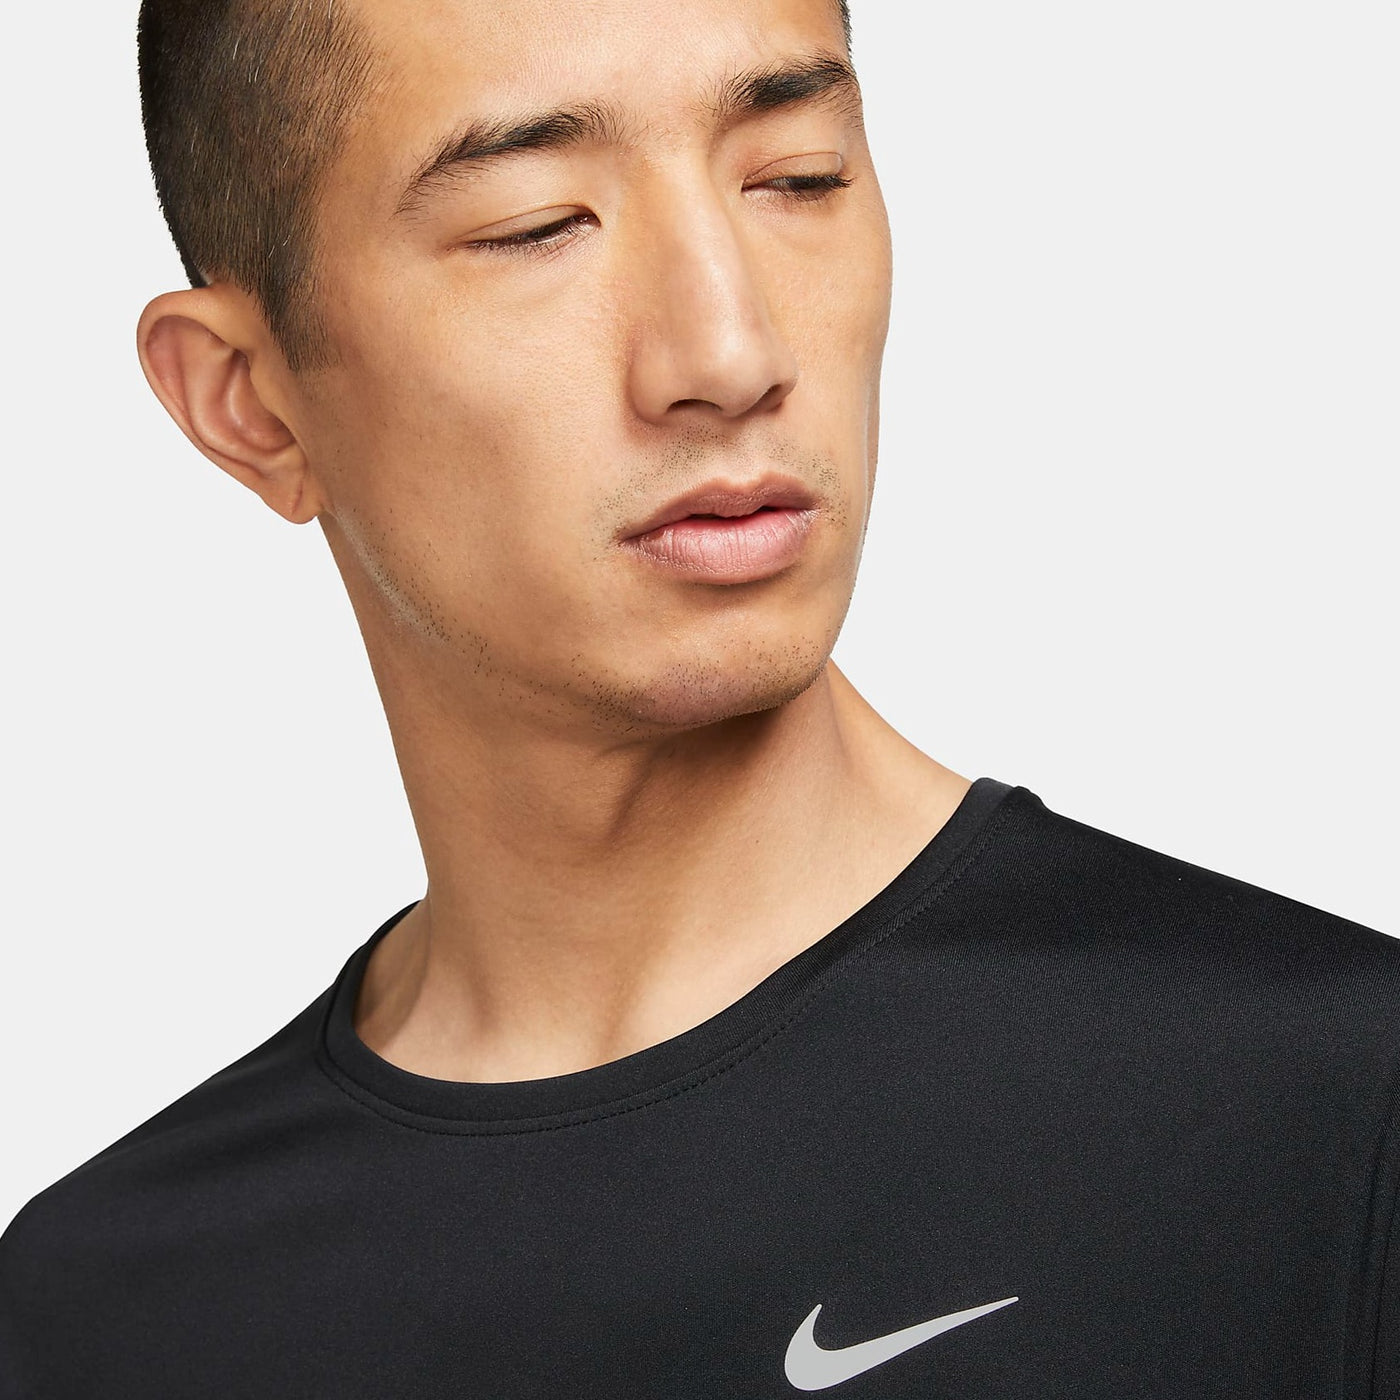 Nike Dri-FIT Men's Long-Sleeve Running T-shirt - Black